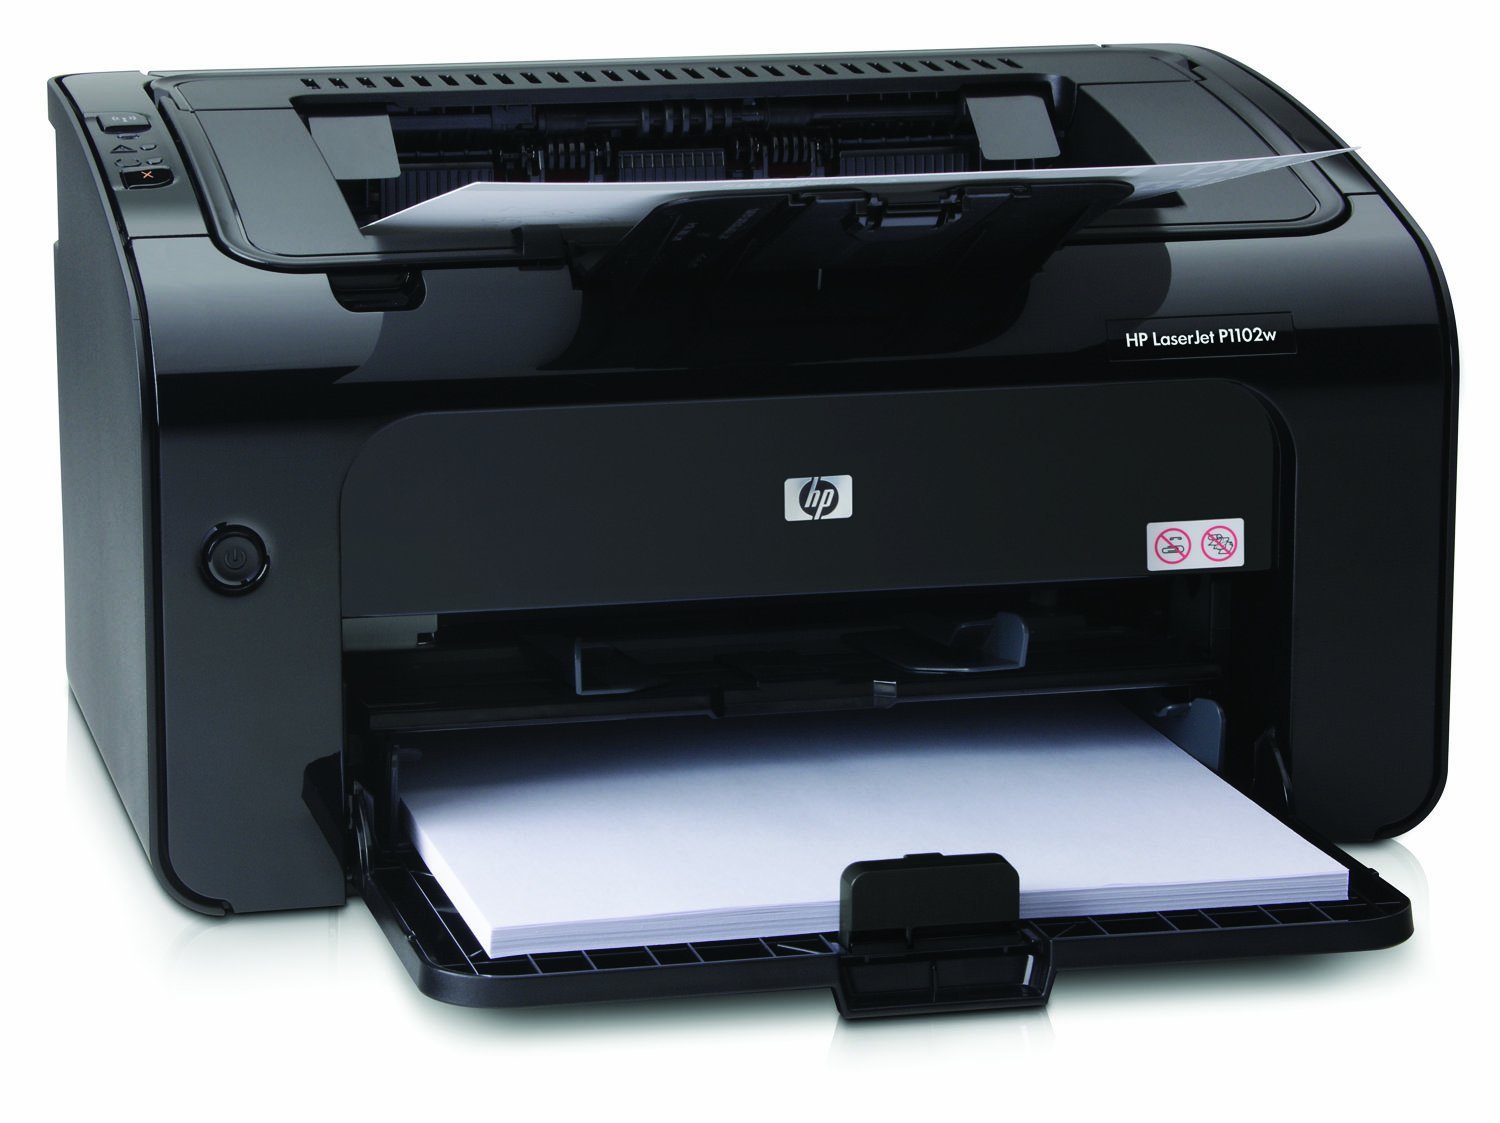 hp laserjet pro m426fdn printer driver for mac